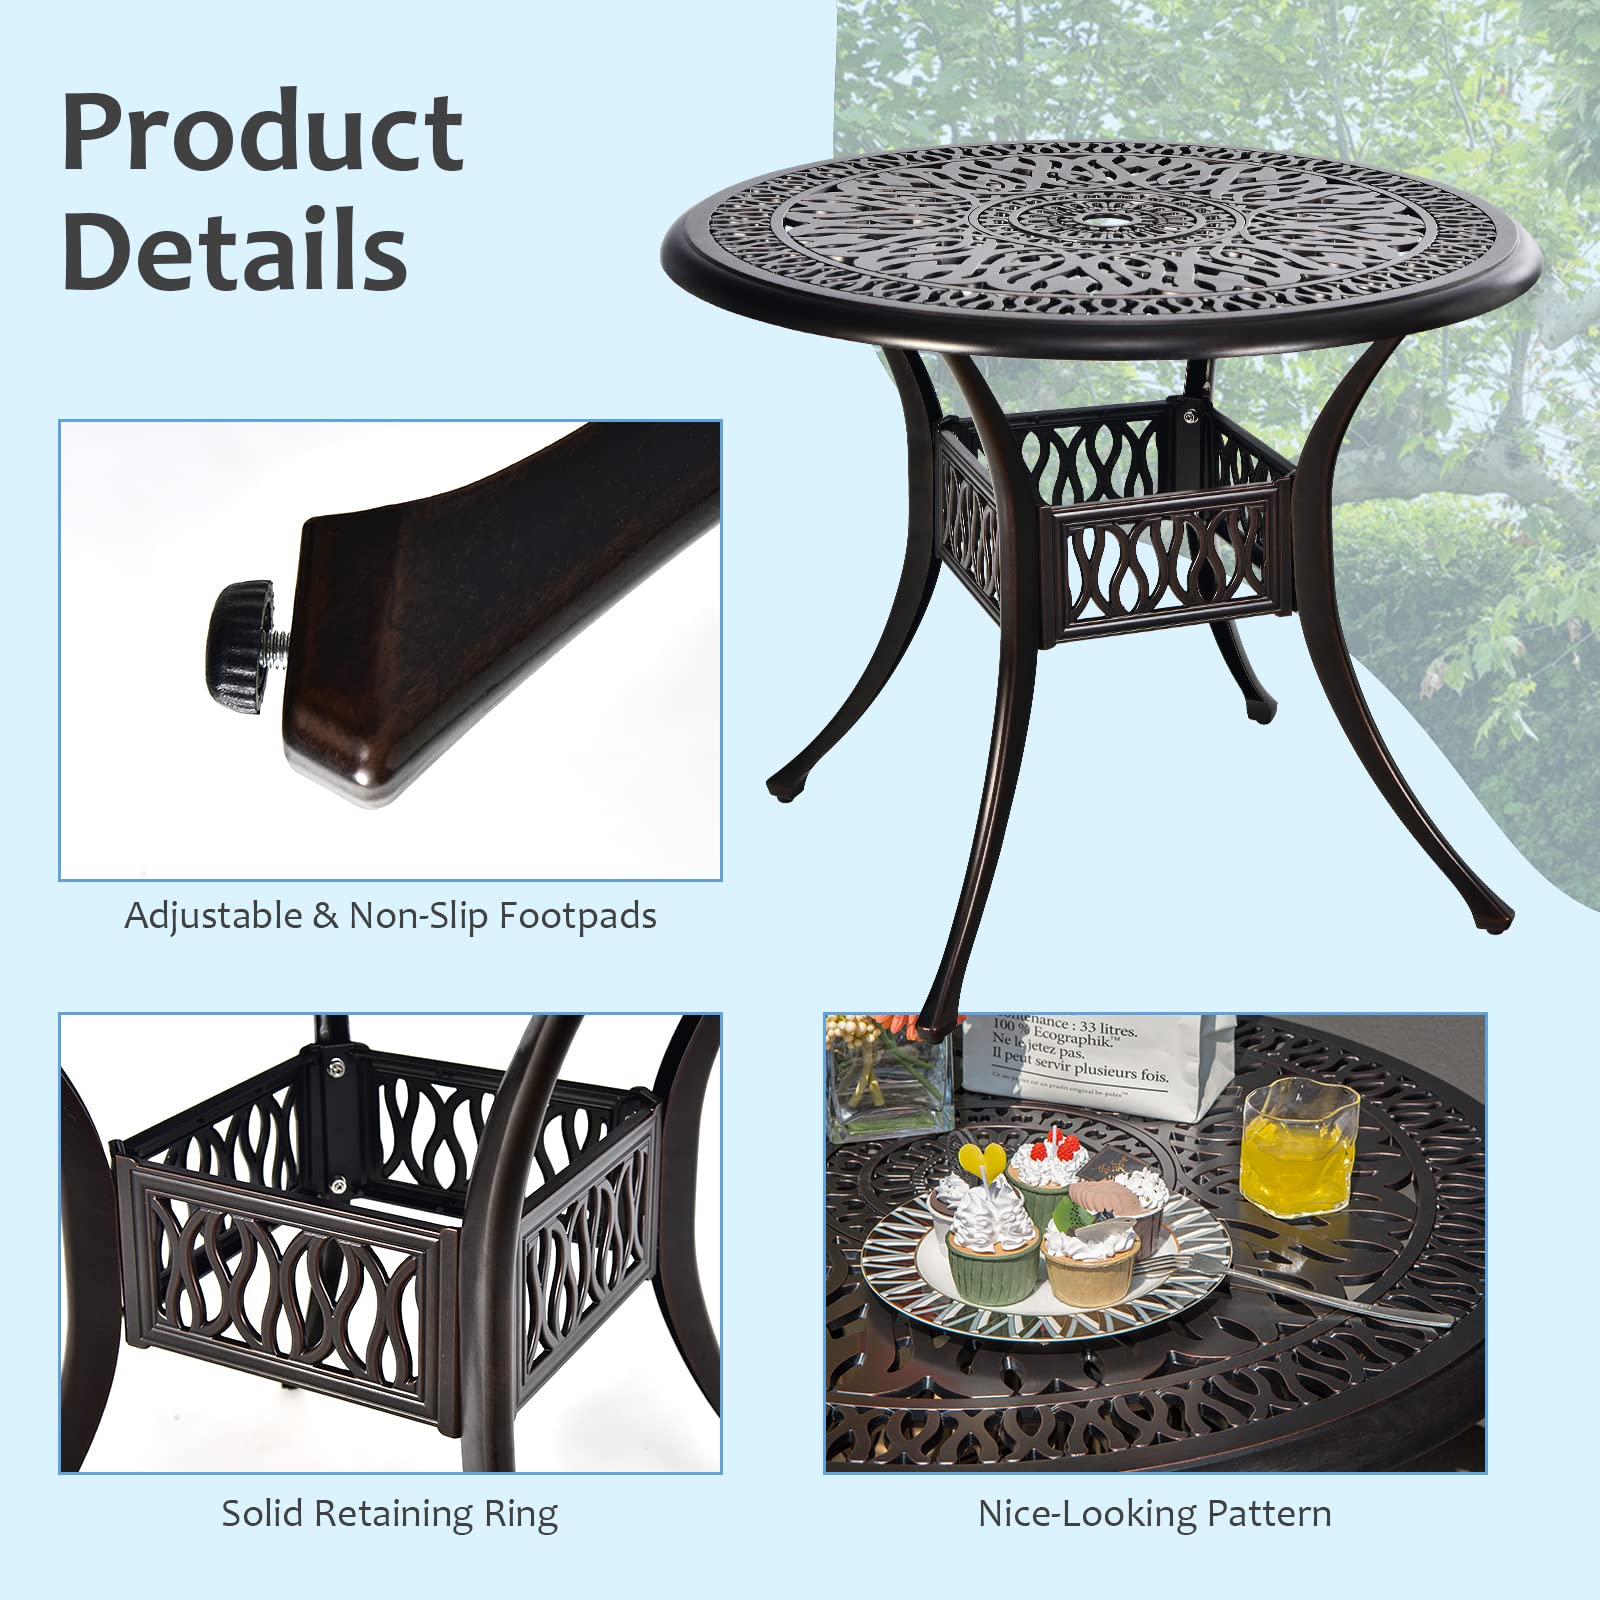 Giantex 3 Pcs Patio Bistro Set, Cast Aluminum Outdoor Dining Set,Round Patio Table with Umbrella Hole, 2 Patio Chairs